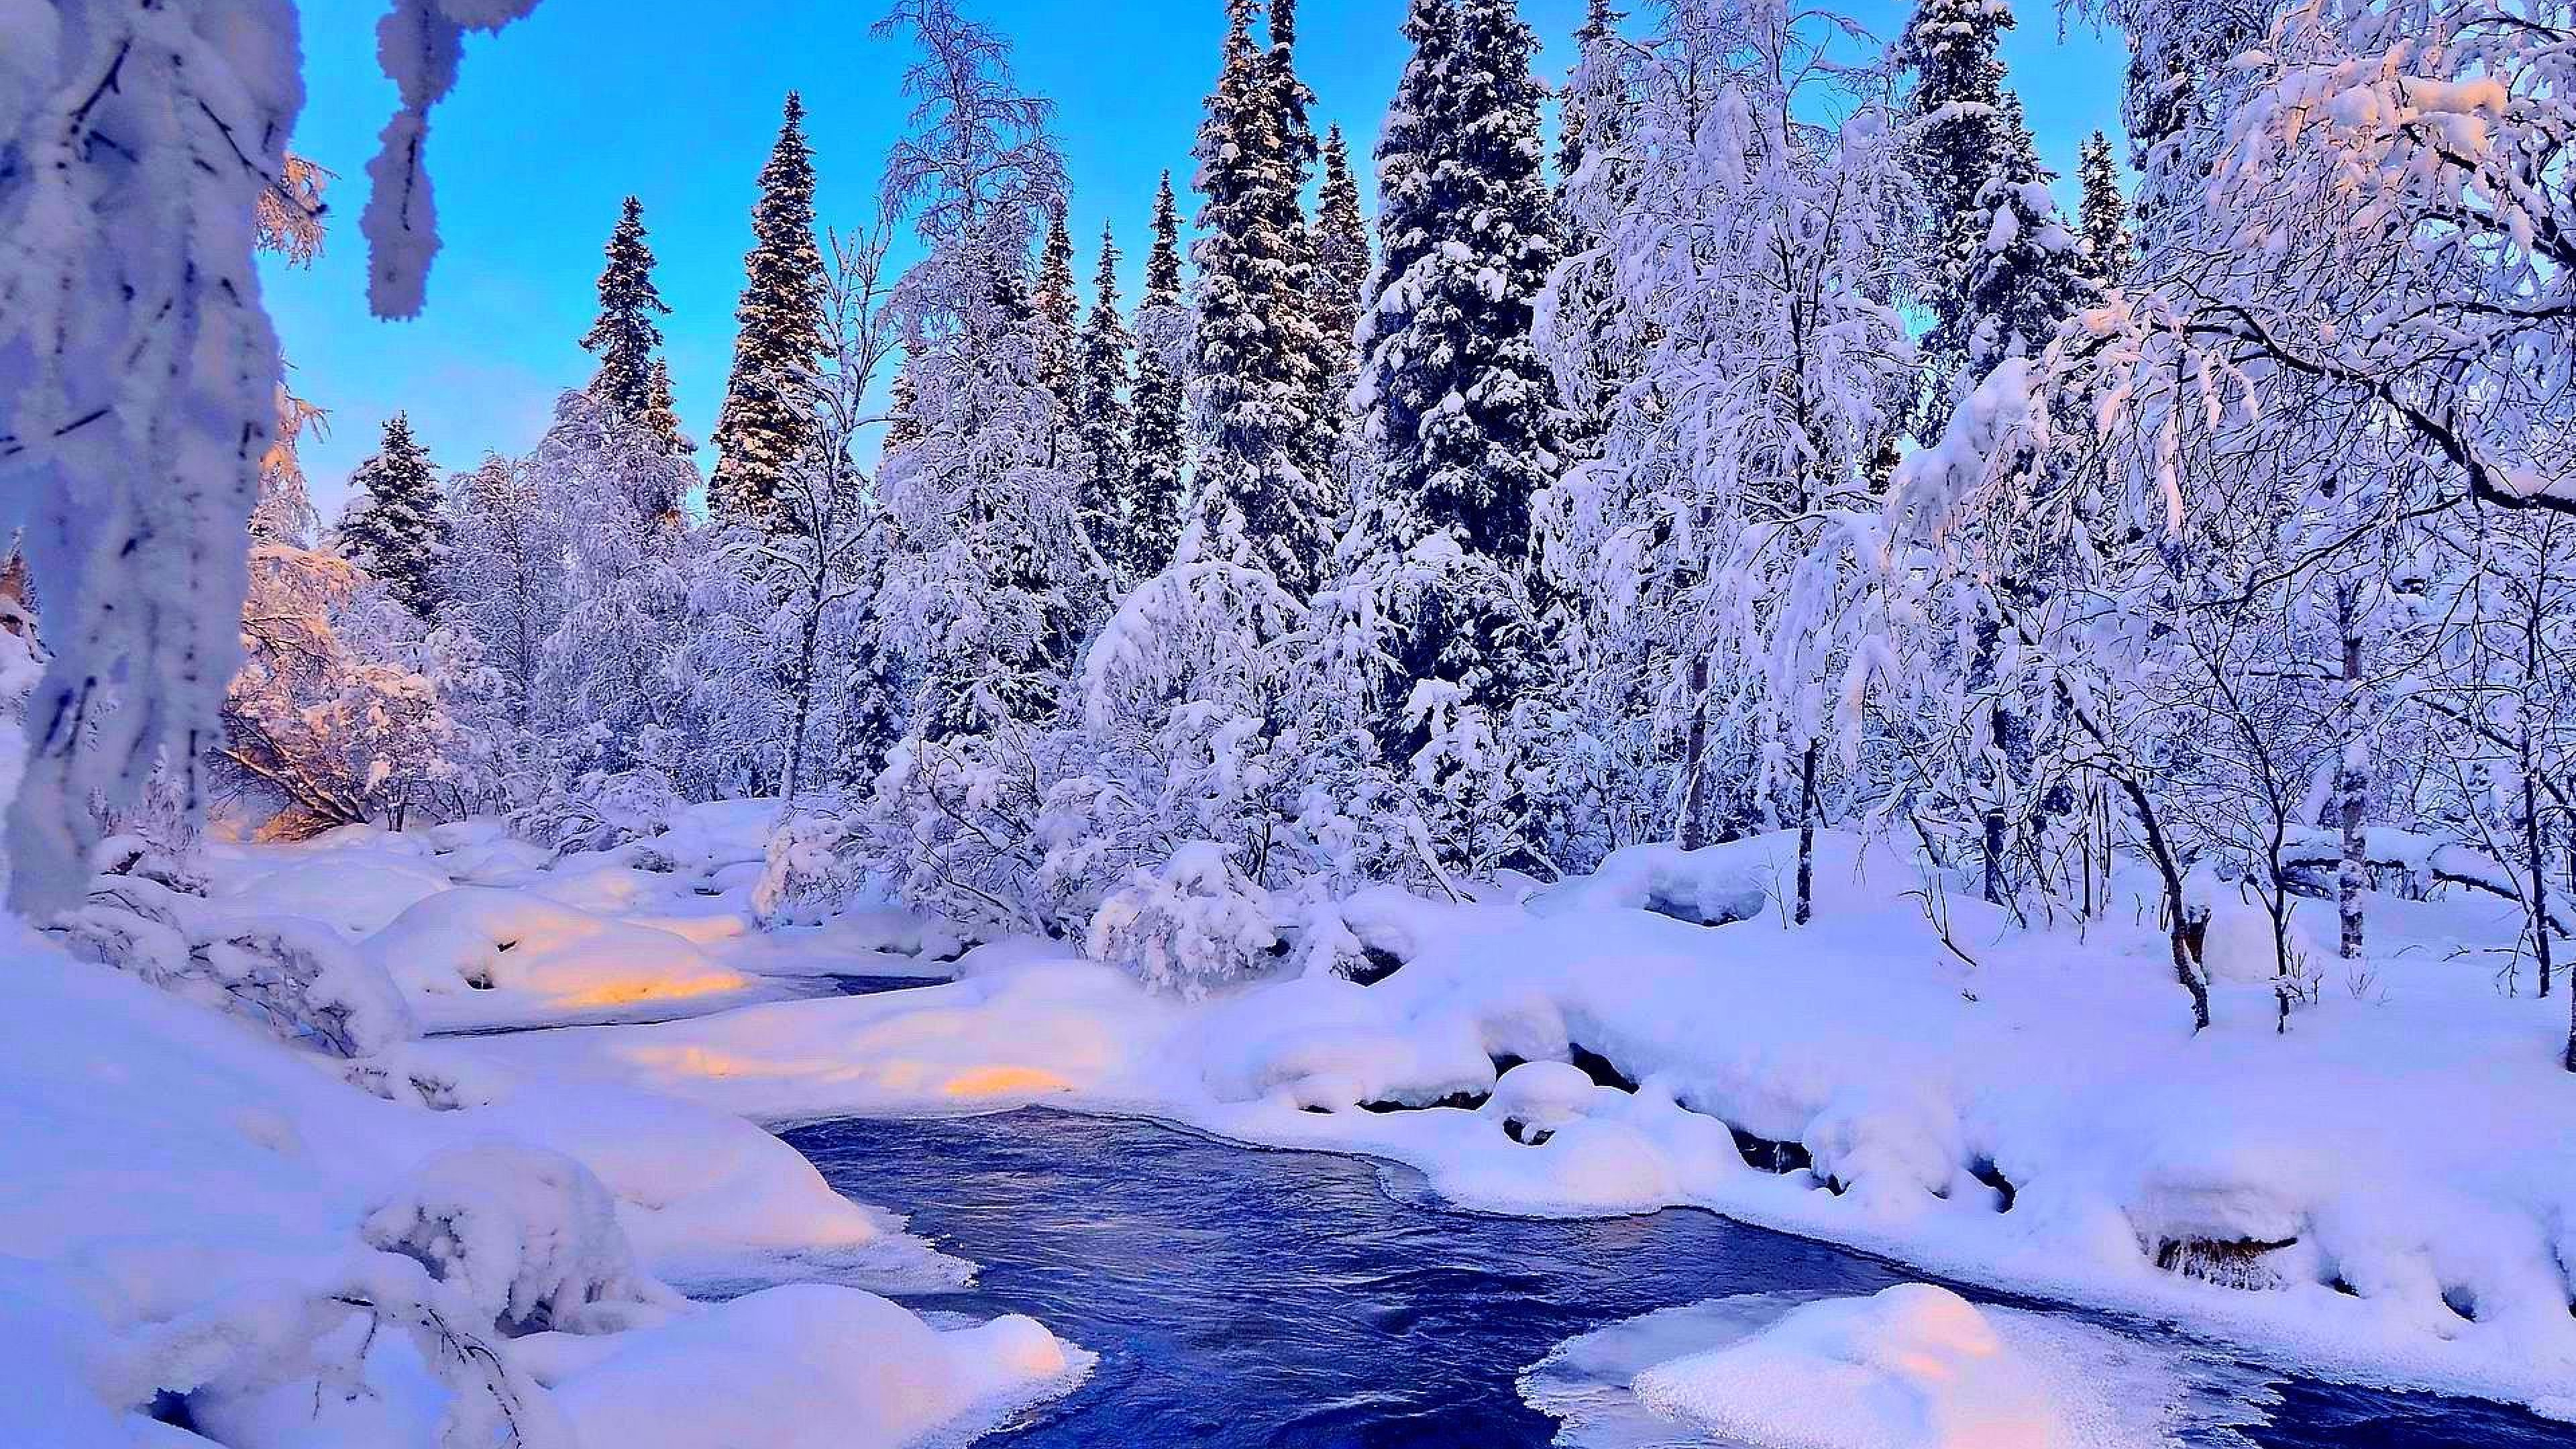 Звуки природы зимой. Зимний пейзаж. Зима в лесу. Снежная зима. Красивый зимний лес.